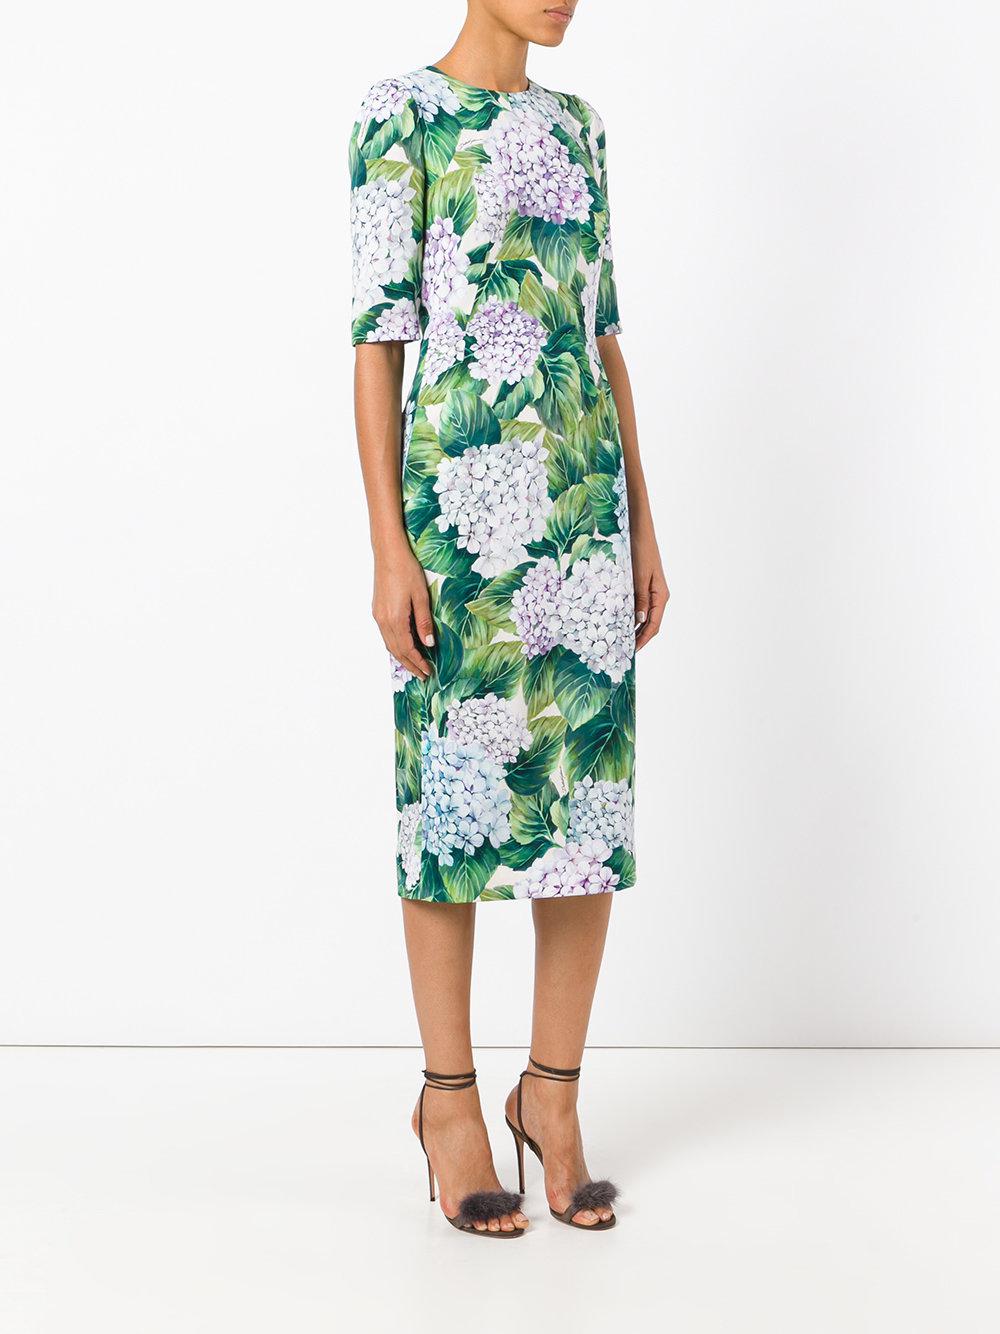 Dolce & Gabbana Silk Hydrangea Print Dress in Green - Lyst